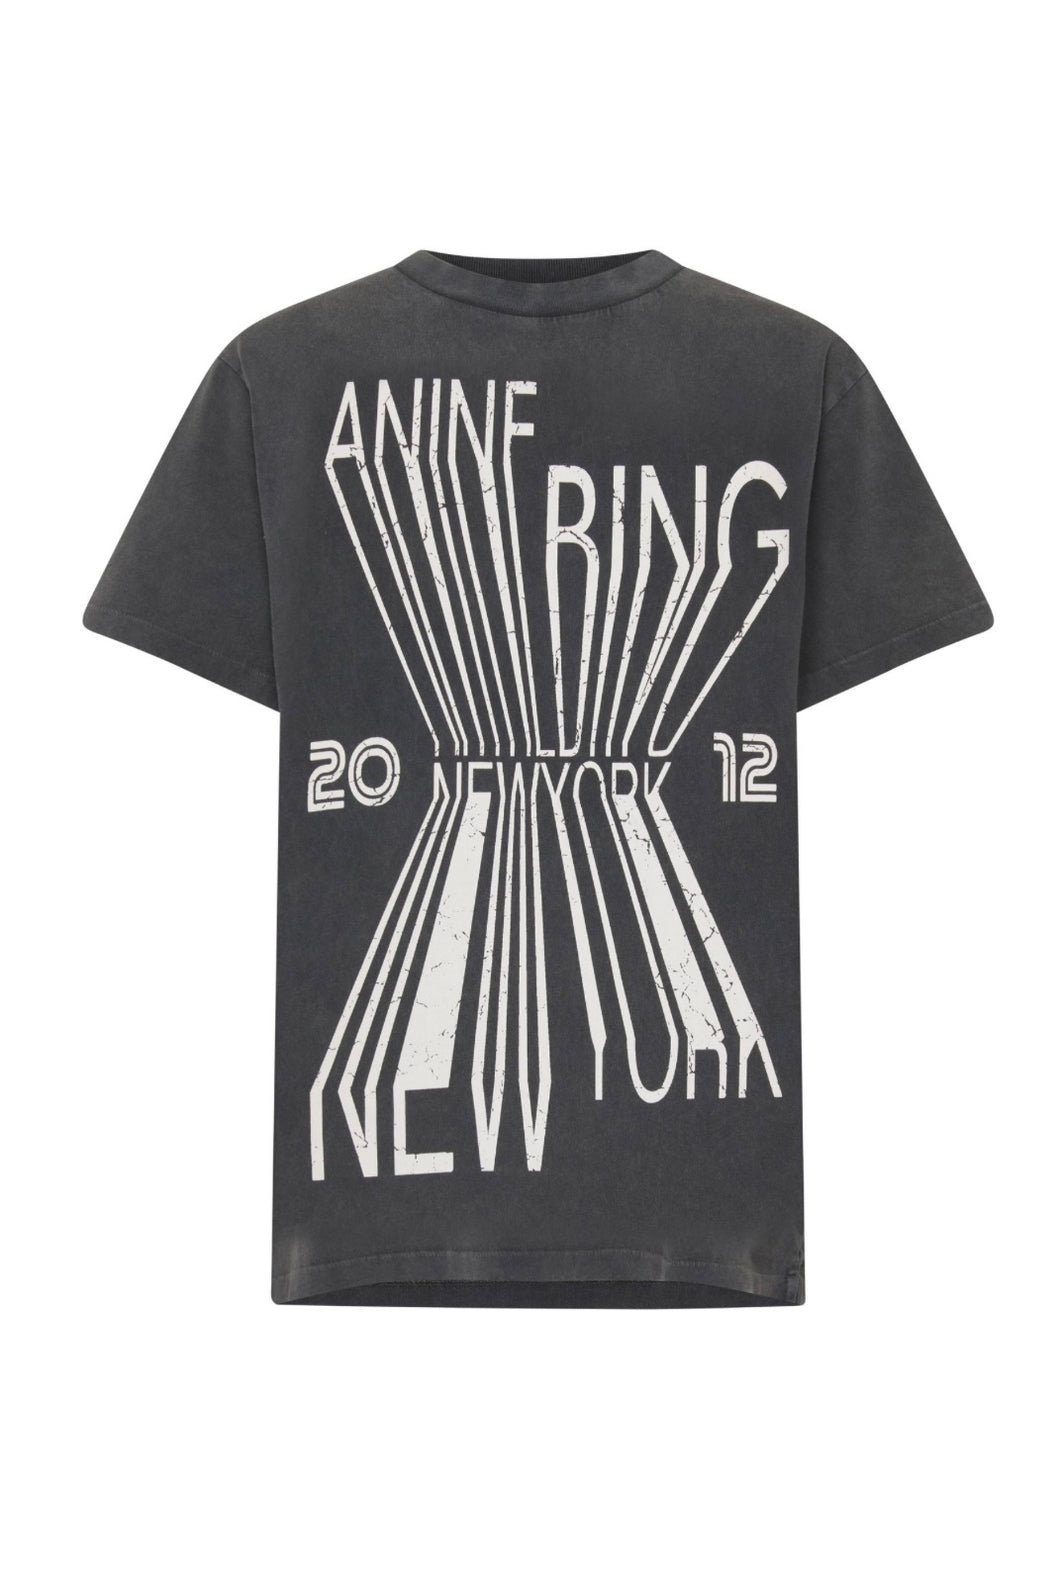 Anine Bing Colby Tee New York Black A-08-2198-000